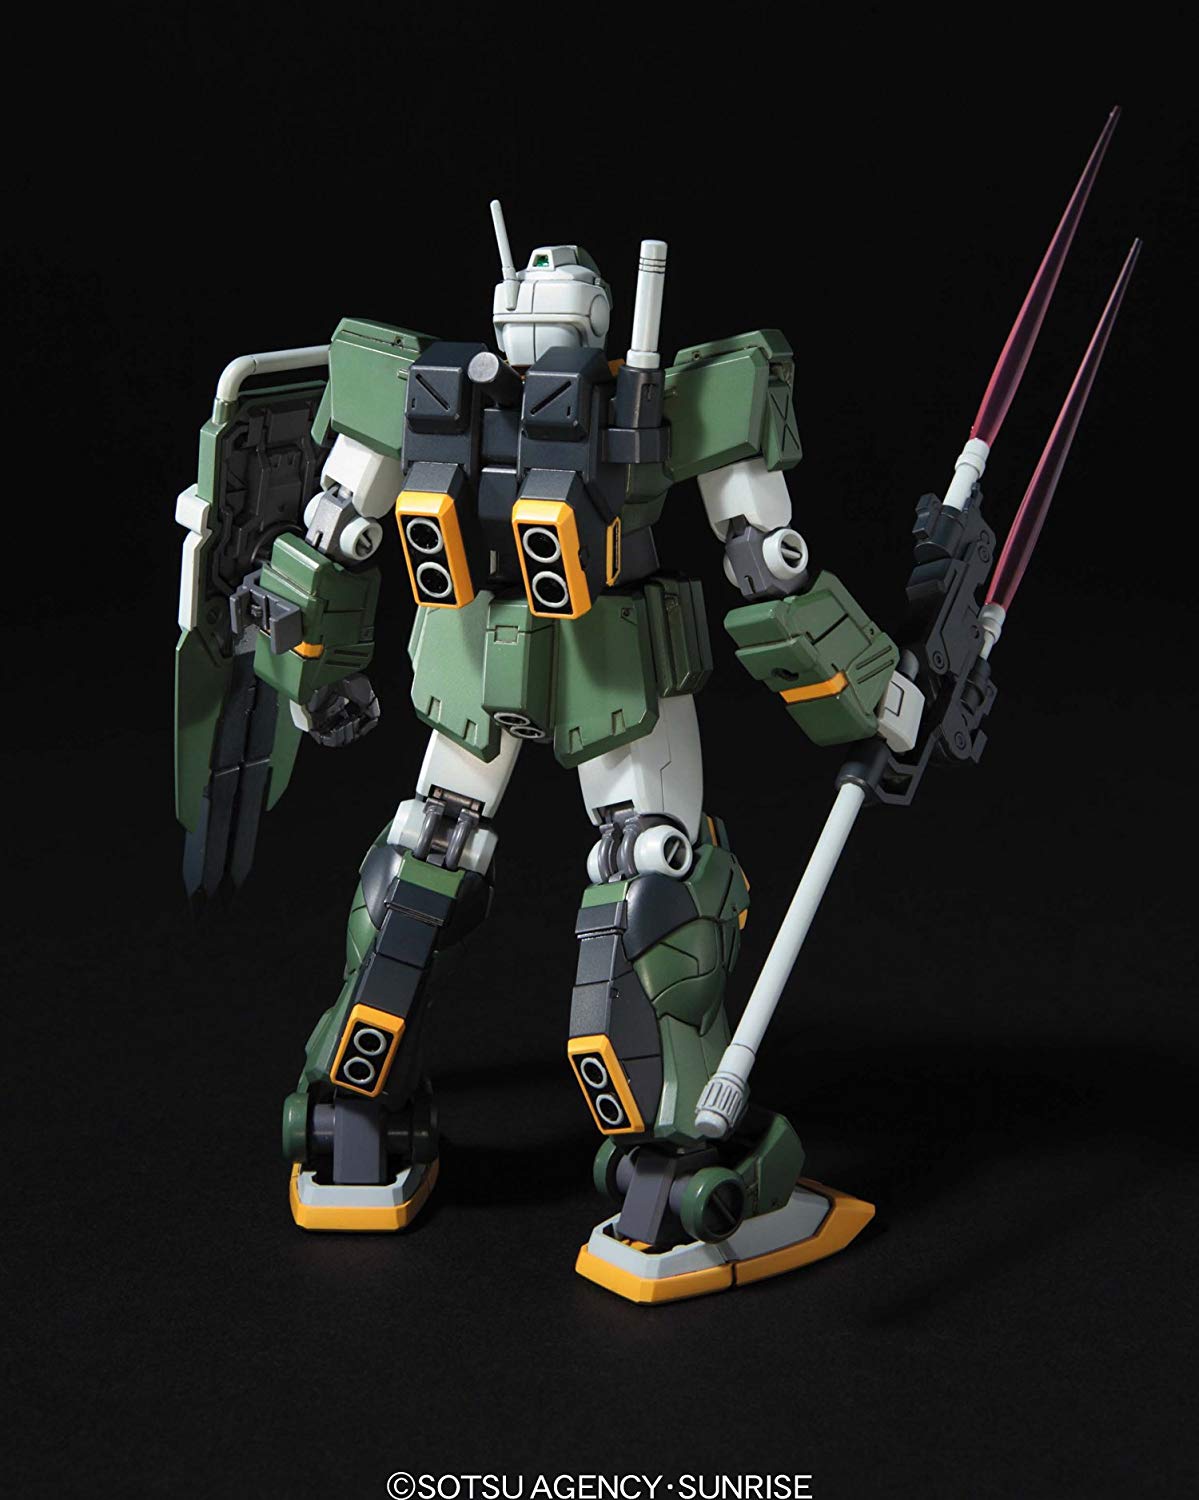 HGUC 1/144 GM Striker - High Grade Harmony of Gundam | Glacier Hobbies